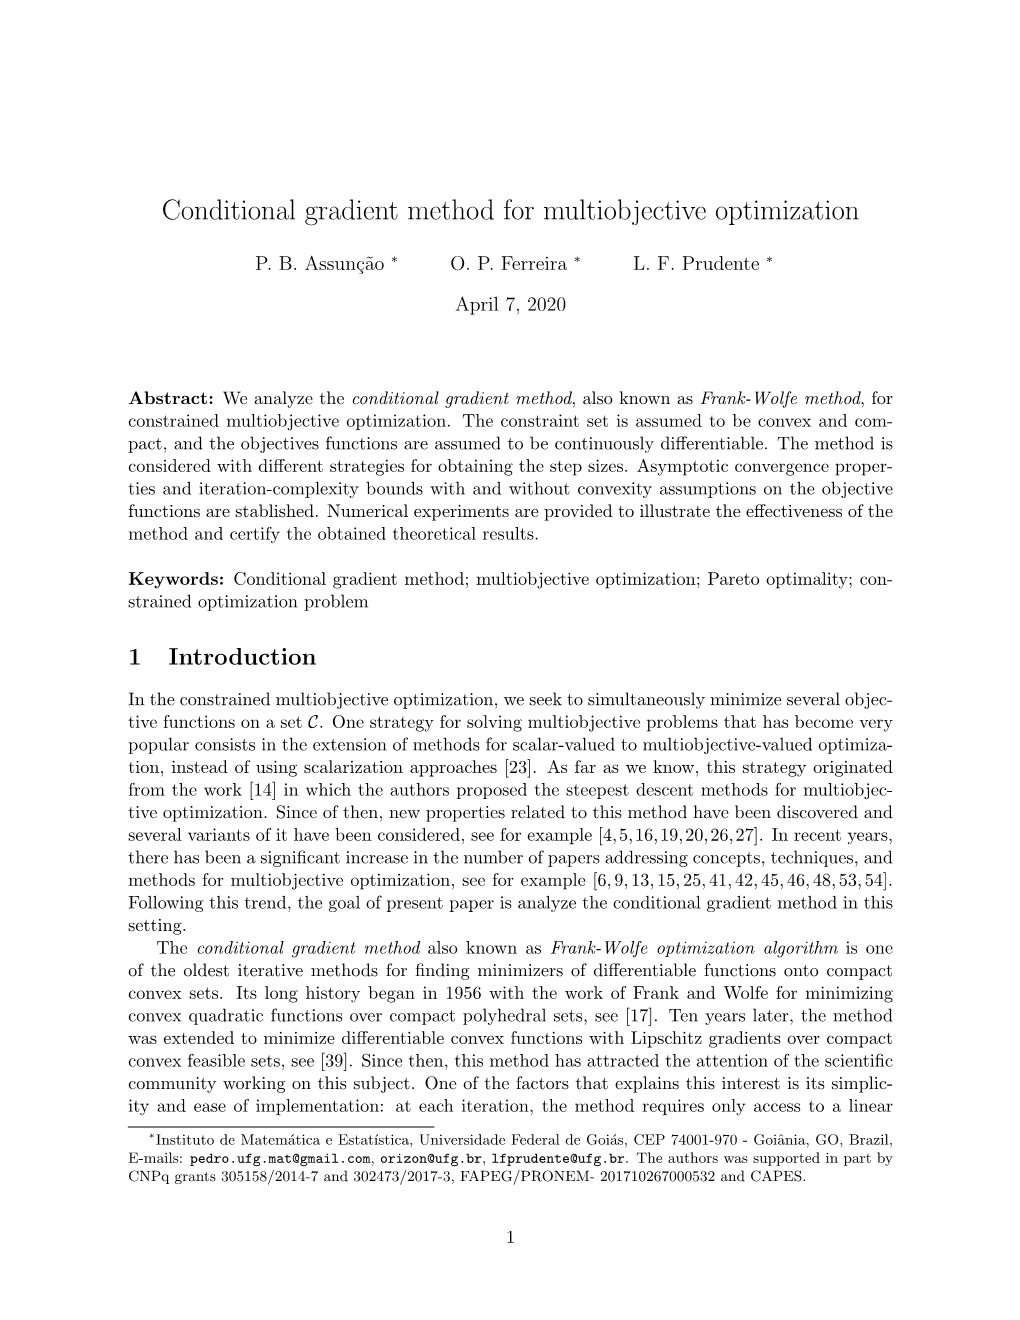 Conditional Gradient Method for Multiobjective Optimization